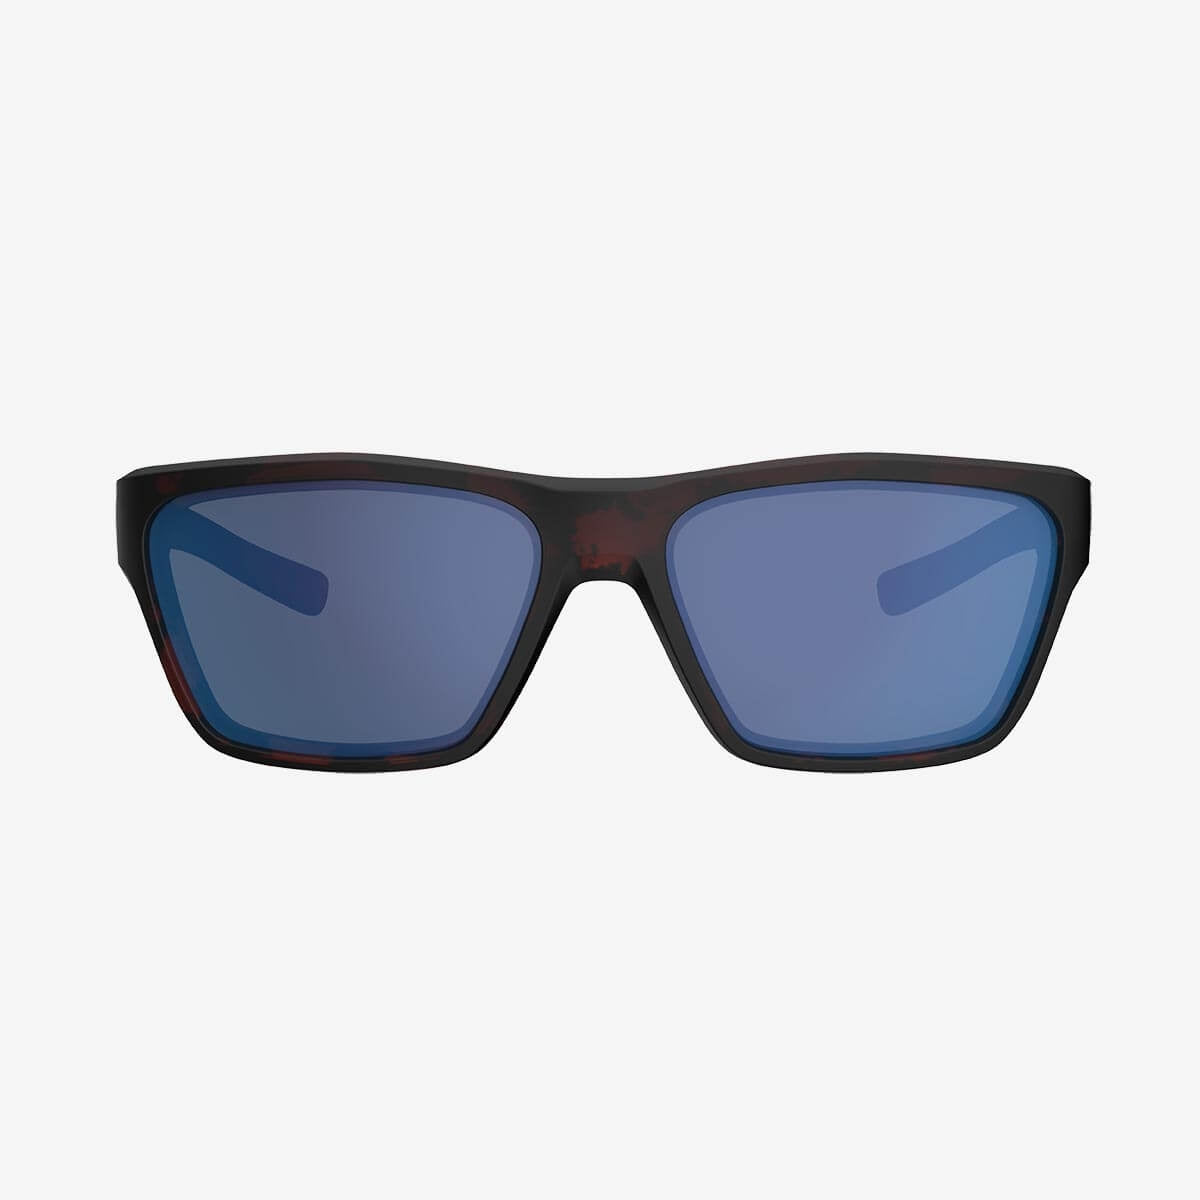 Magpul - Pivot Eyewear, Polarized - Tortoise Frame, Bronze Lens/Blue Mirror